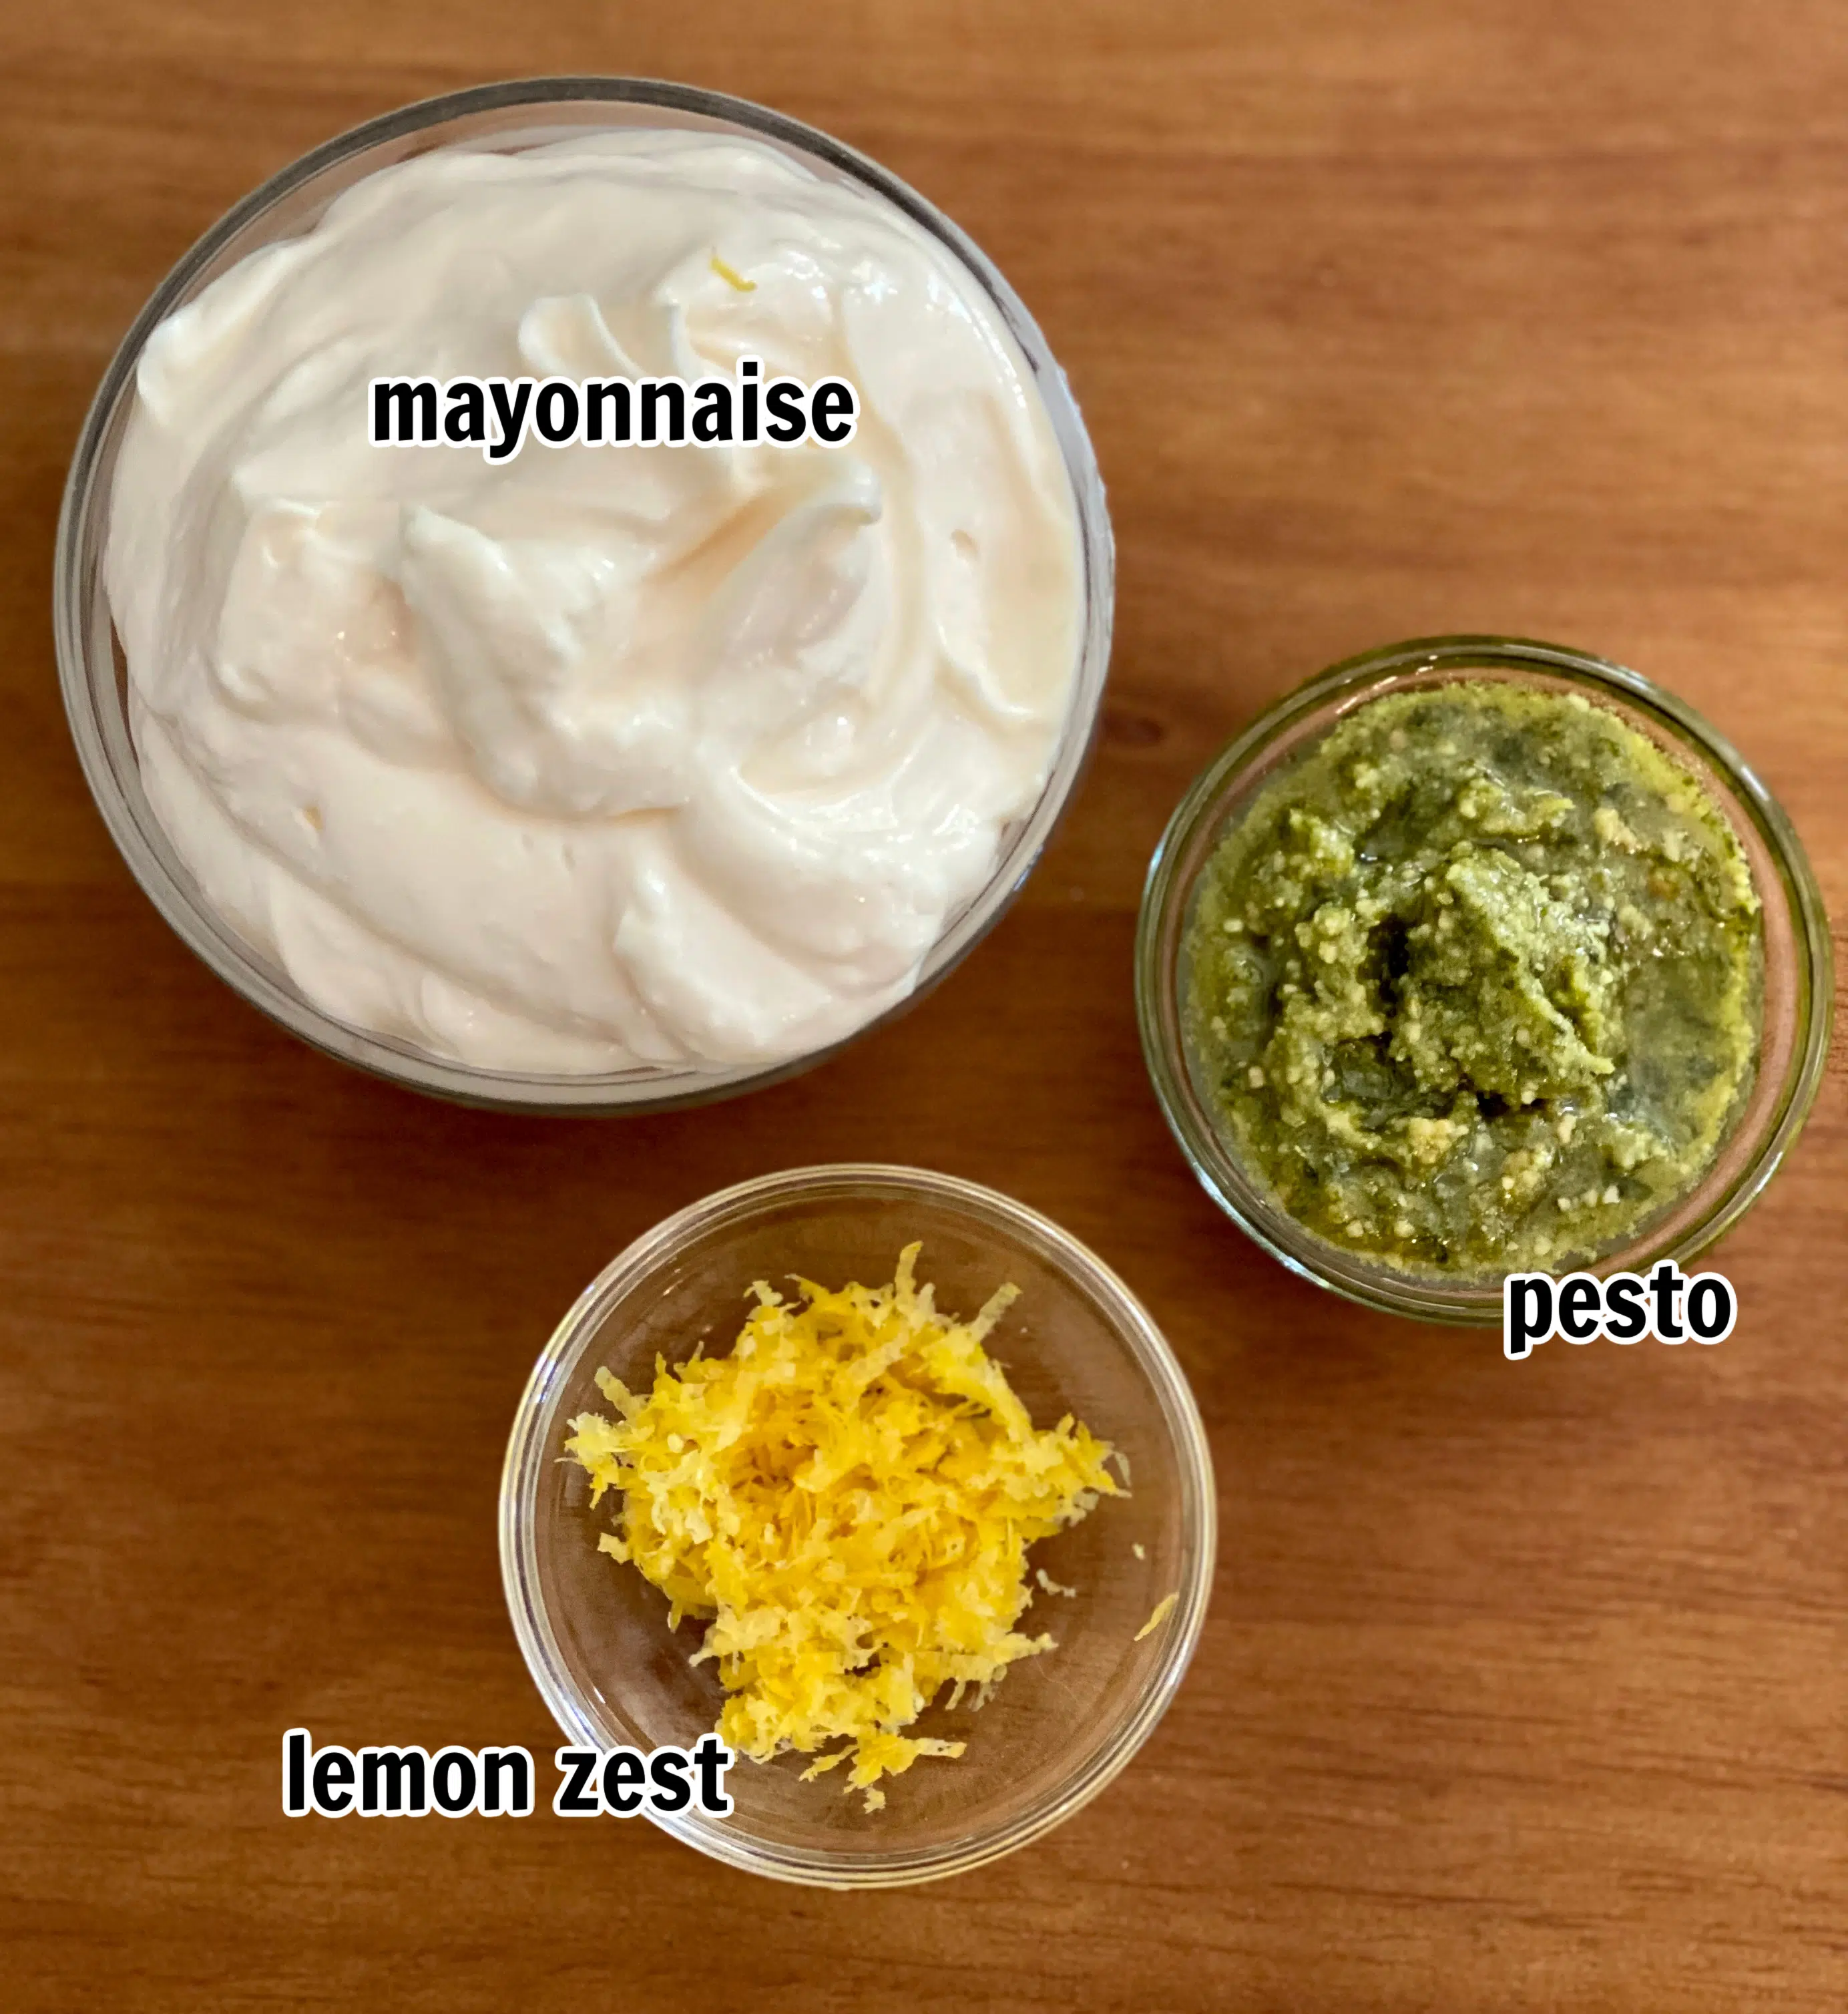 ingredients for pesto mayo